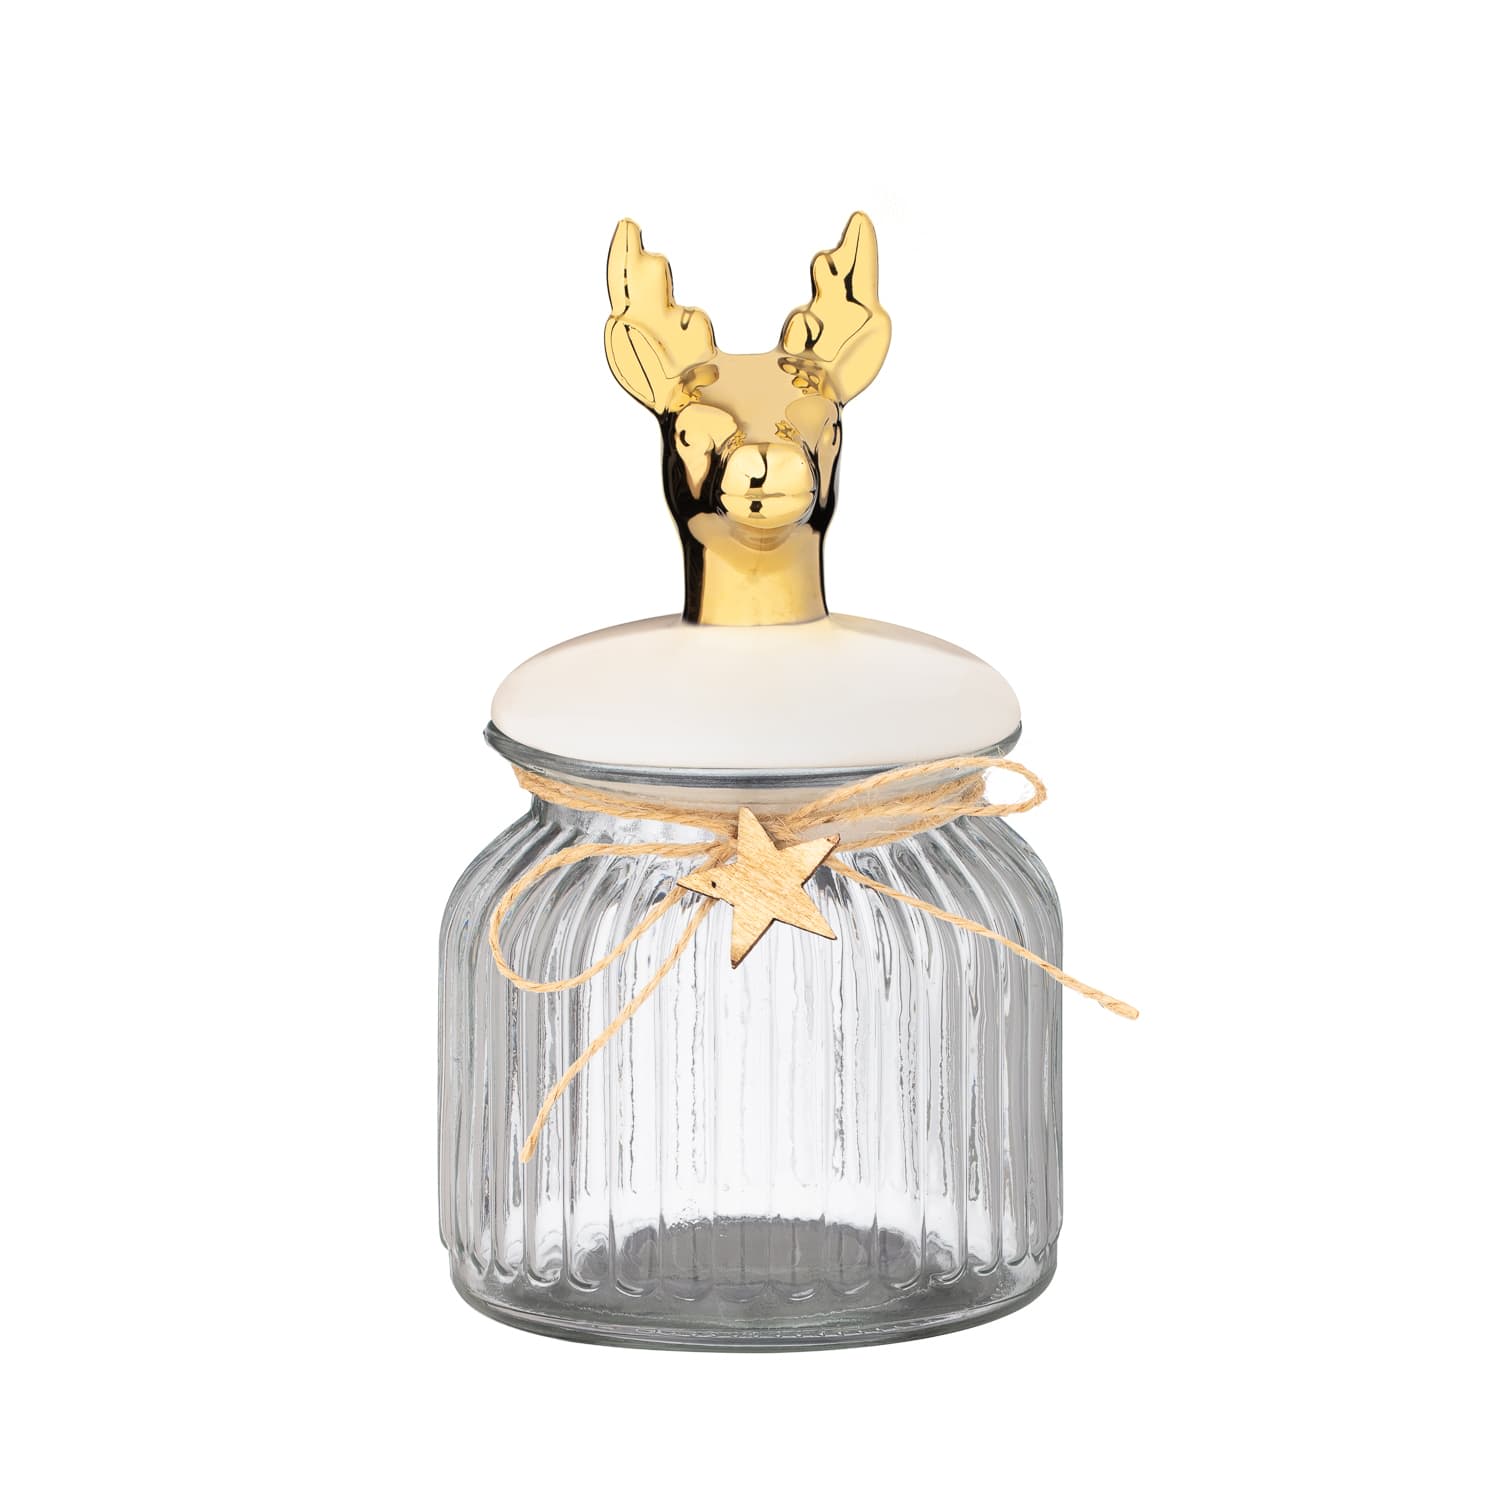 glass cookie jar with decorative deer